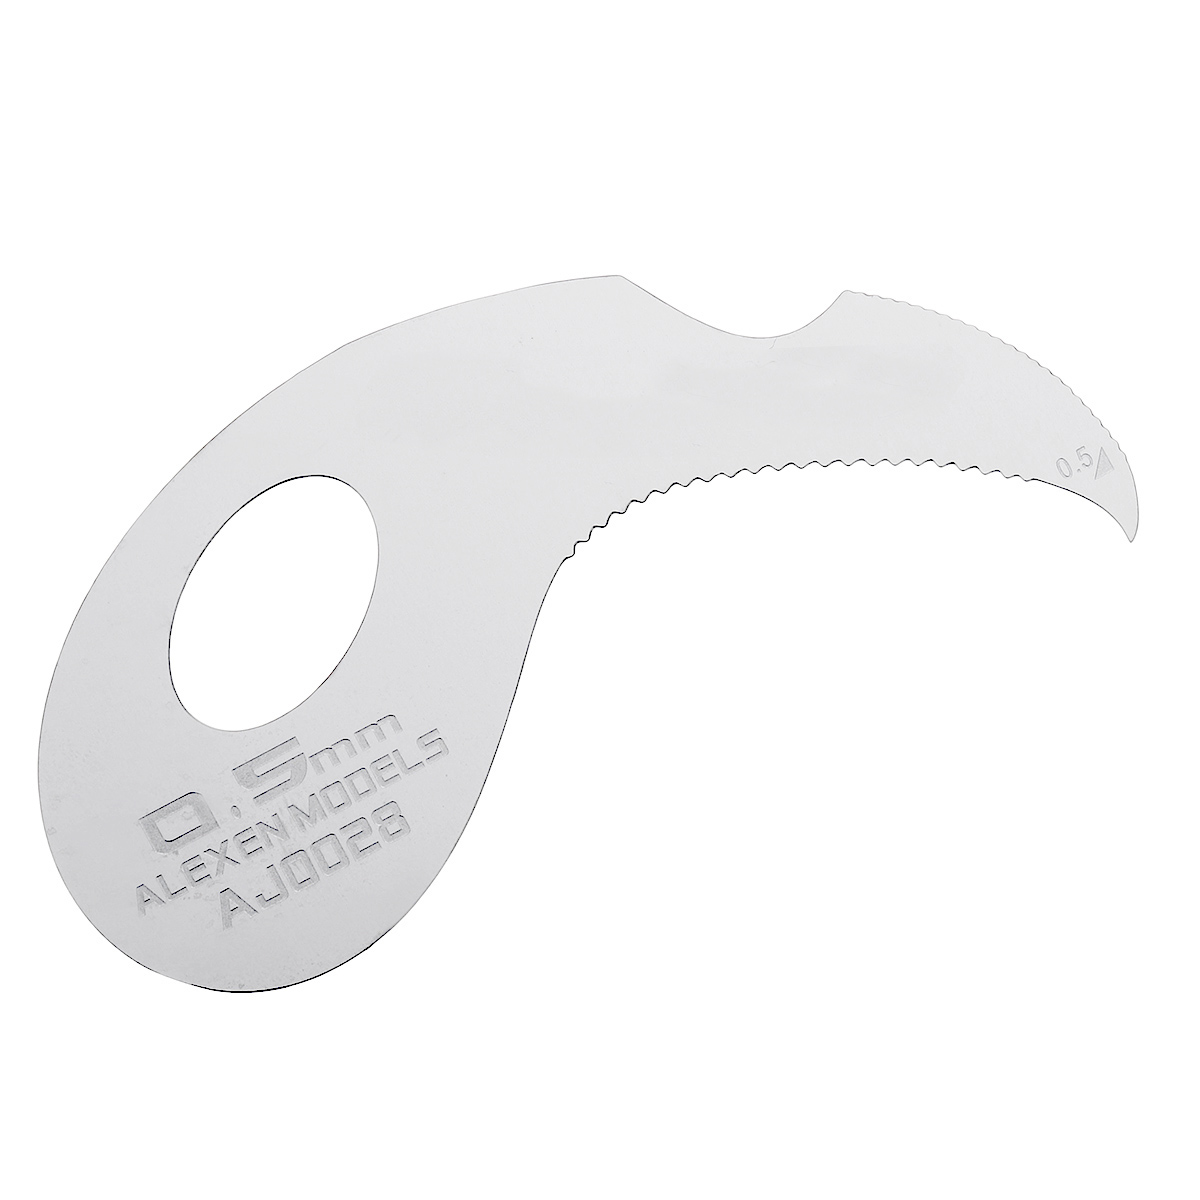 Mini-Handy-Craft-Metal-Saws-Mini-Saw-Razor-Saw-Tools-Modeling-Tool-1674902